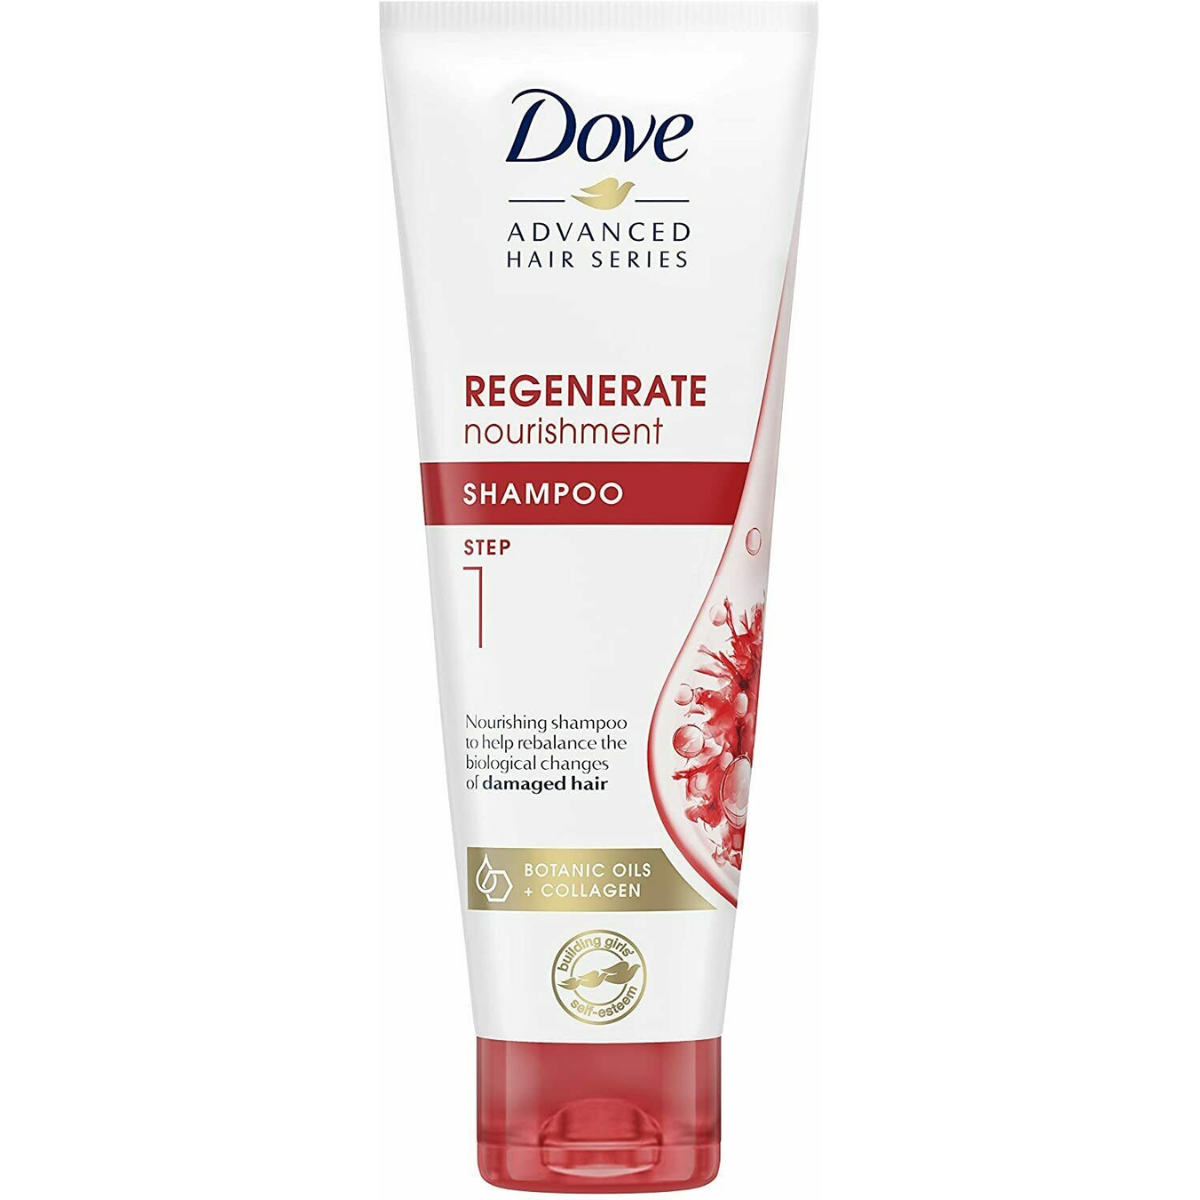 Dove σαμπουάν 250ml Advanced Hair Series Regenerate Nourishment Shampoo With Botanic Oils Collagen.